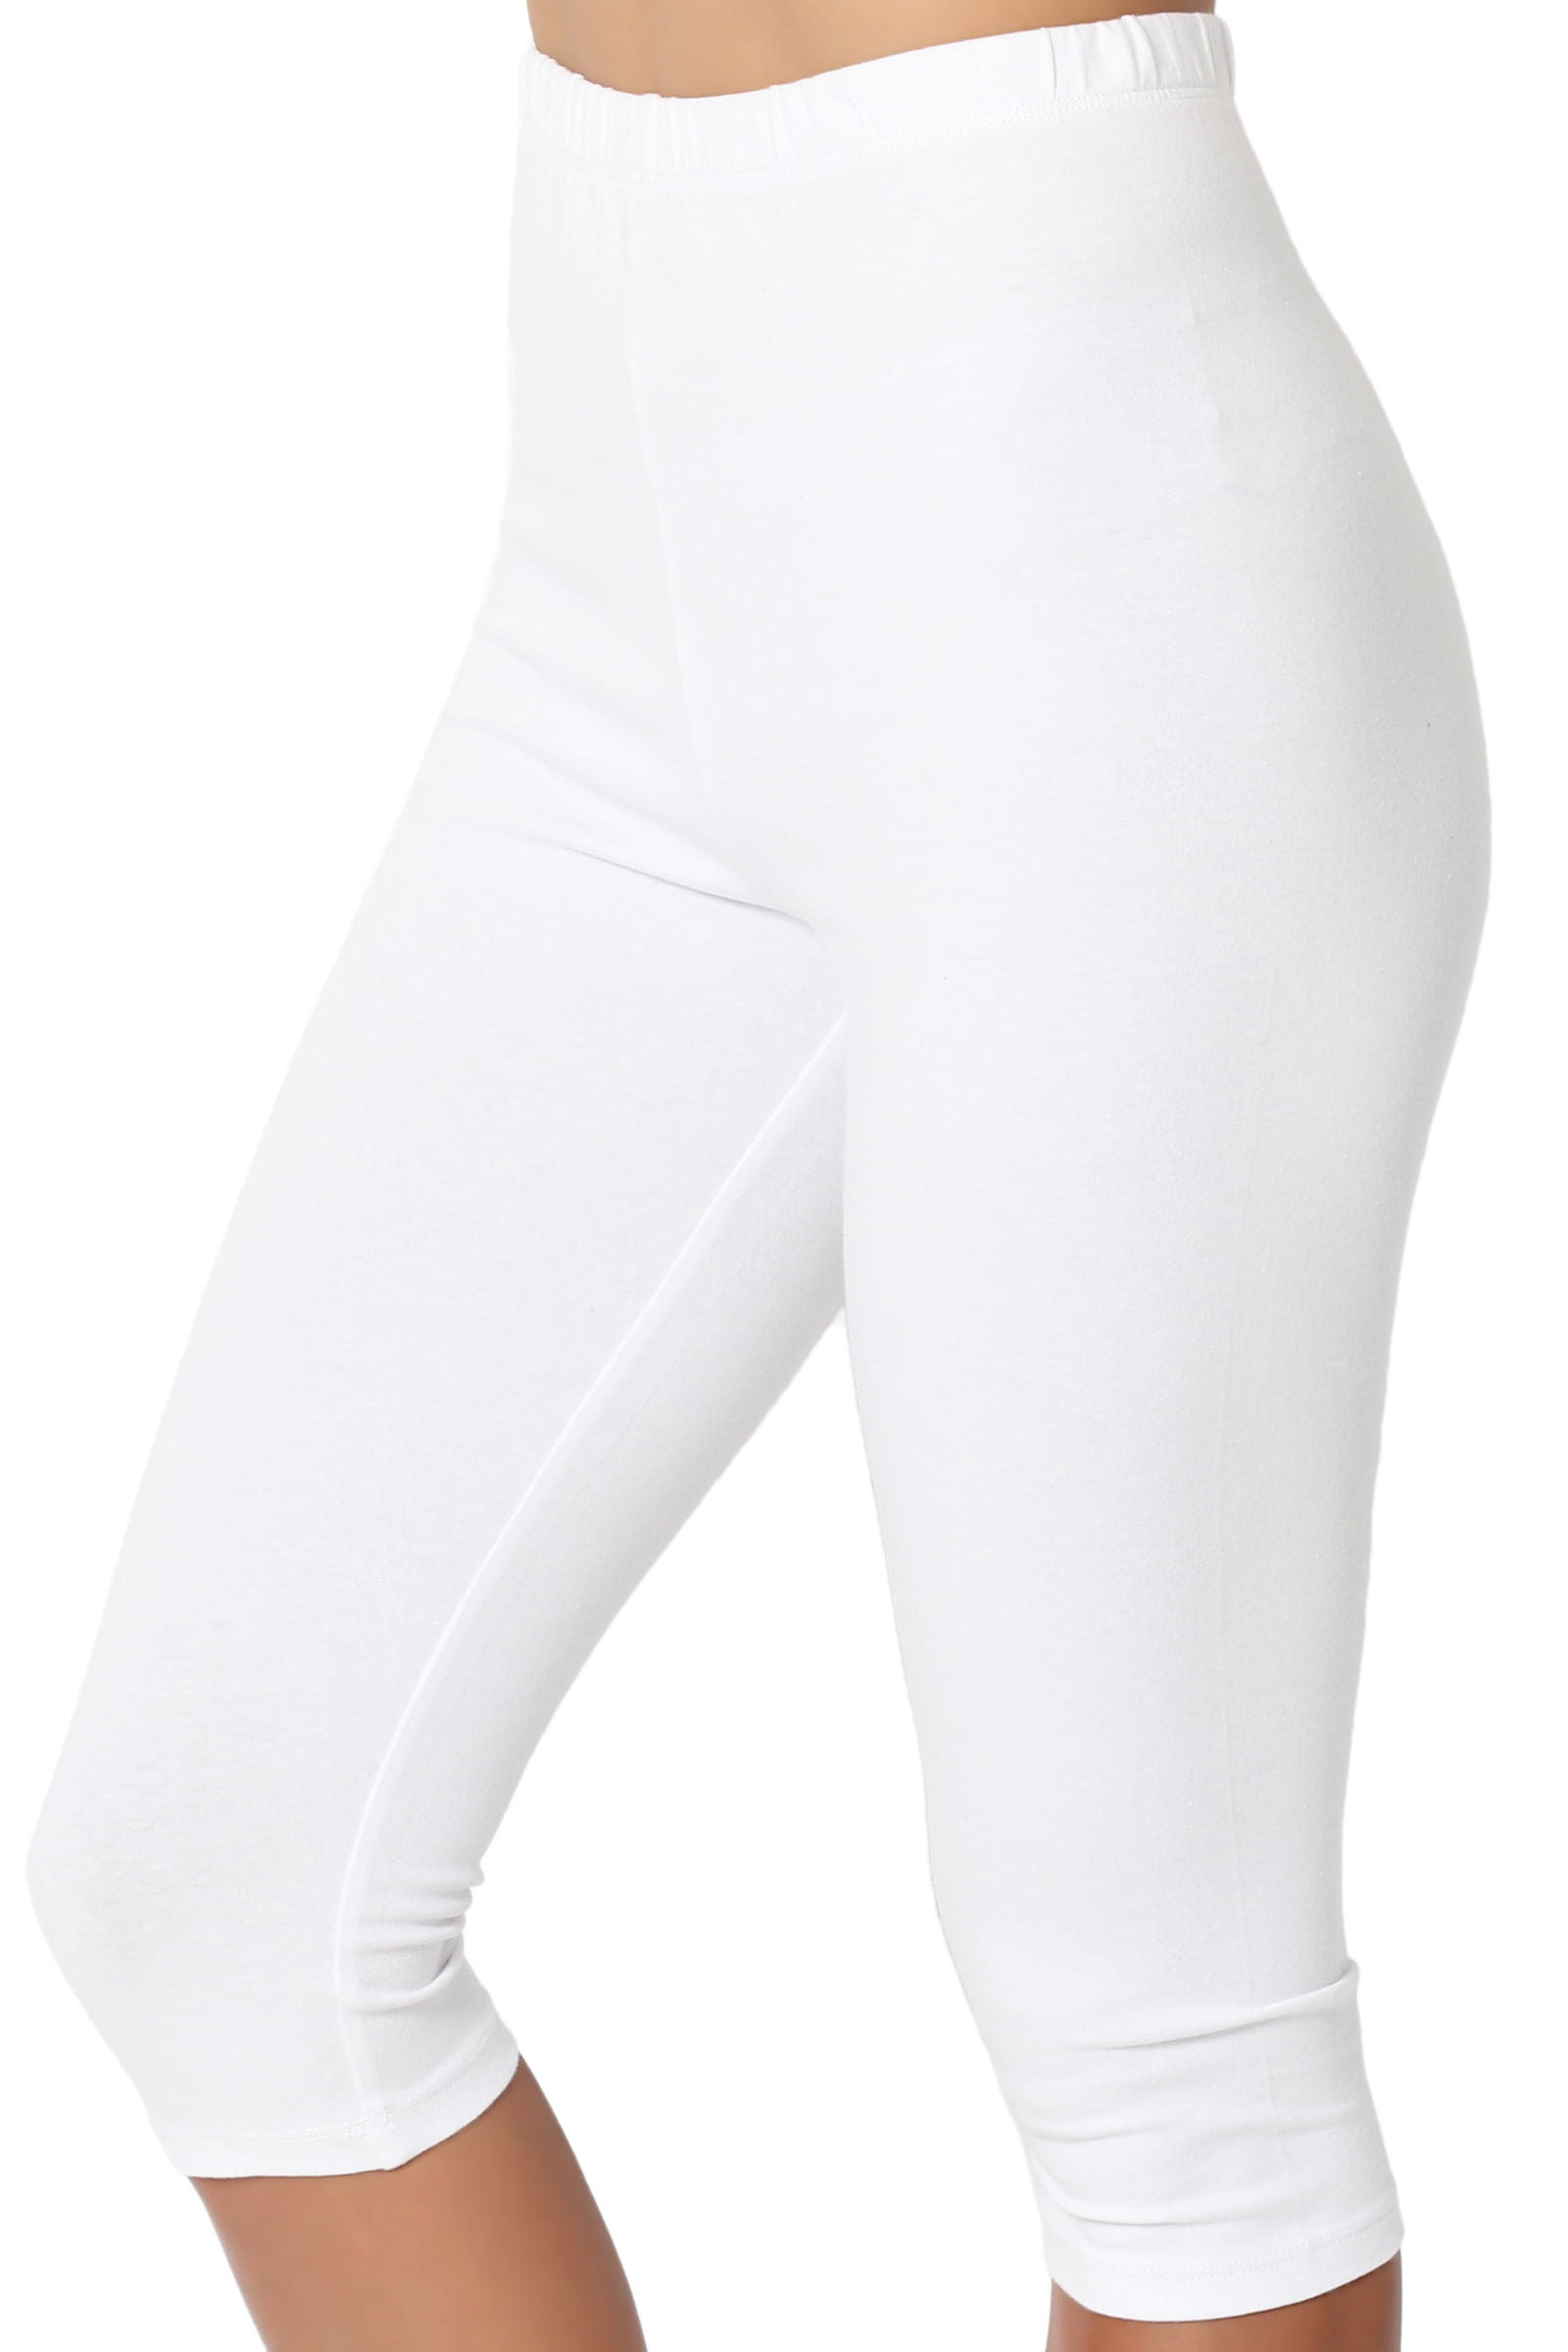 TheMogan Women's S~3X Basic Stretch Cotton Span Below Knee Length Capri ...